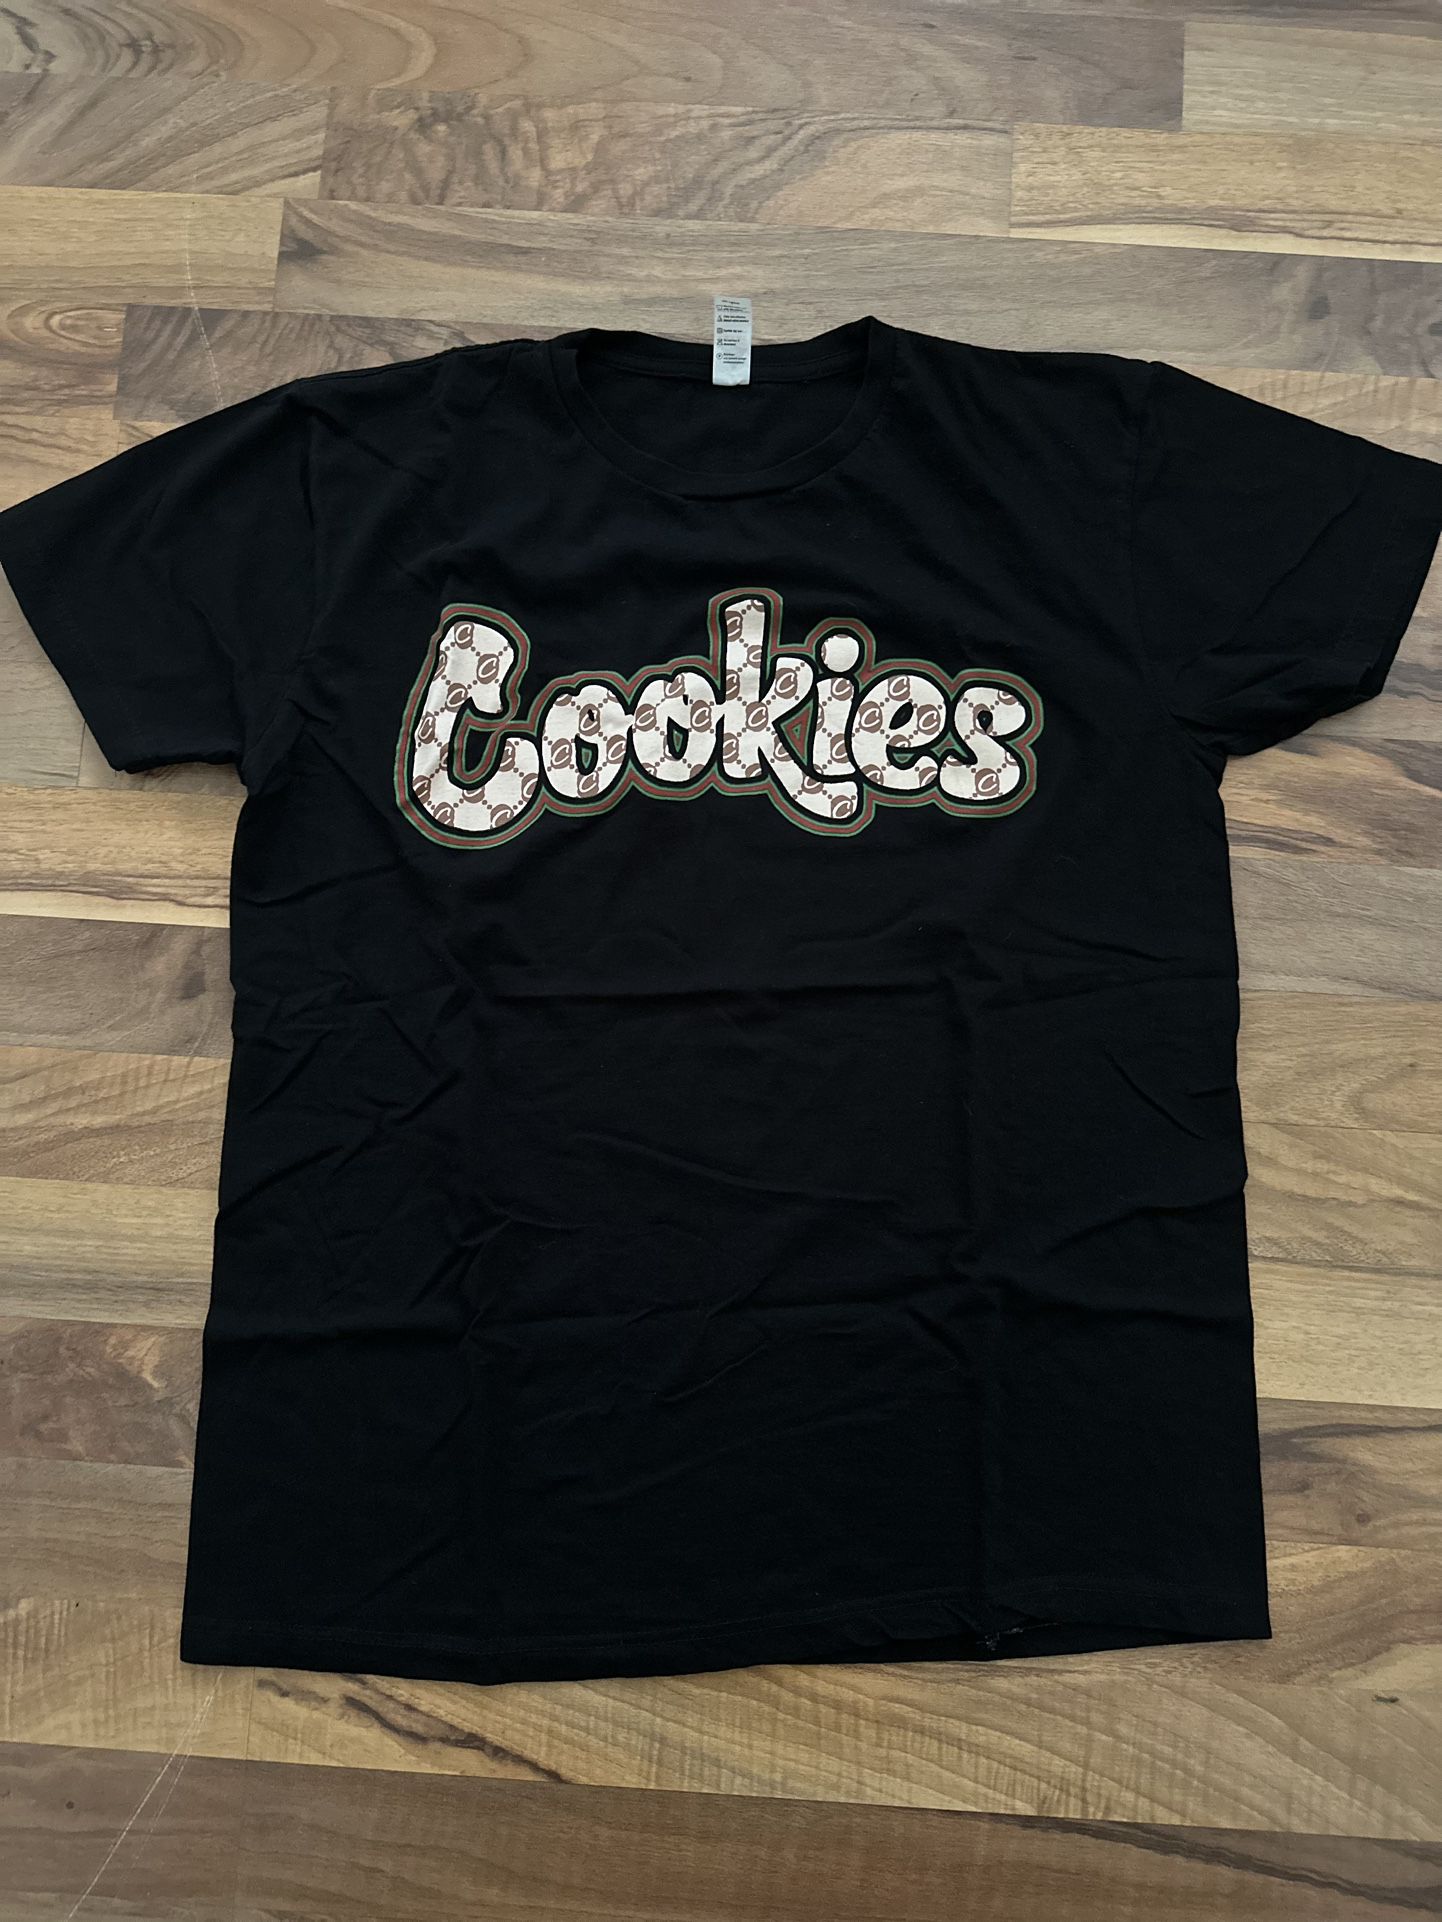 Cookies T Shirt